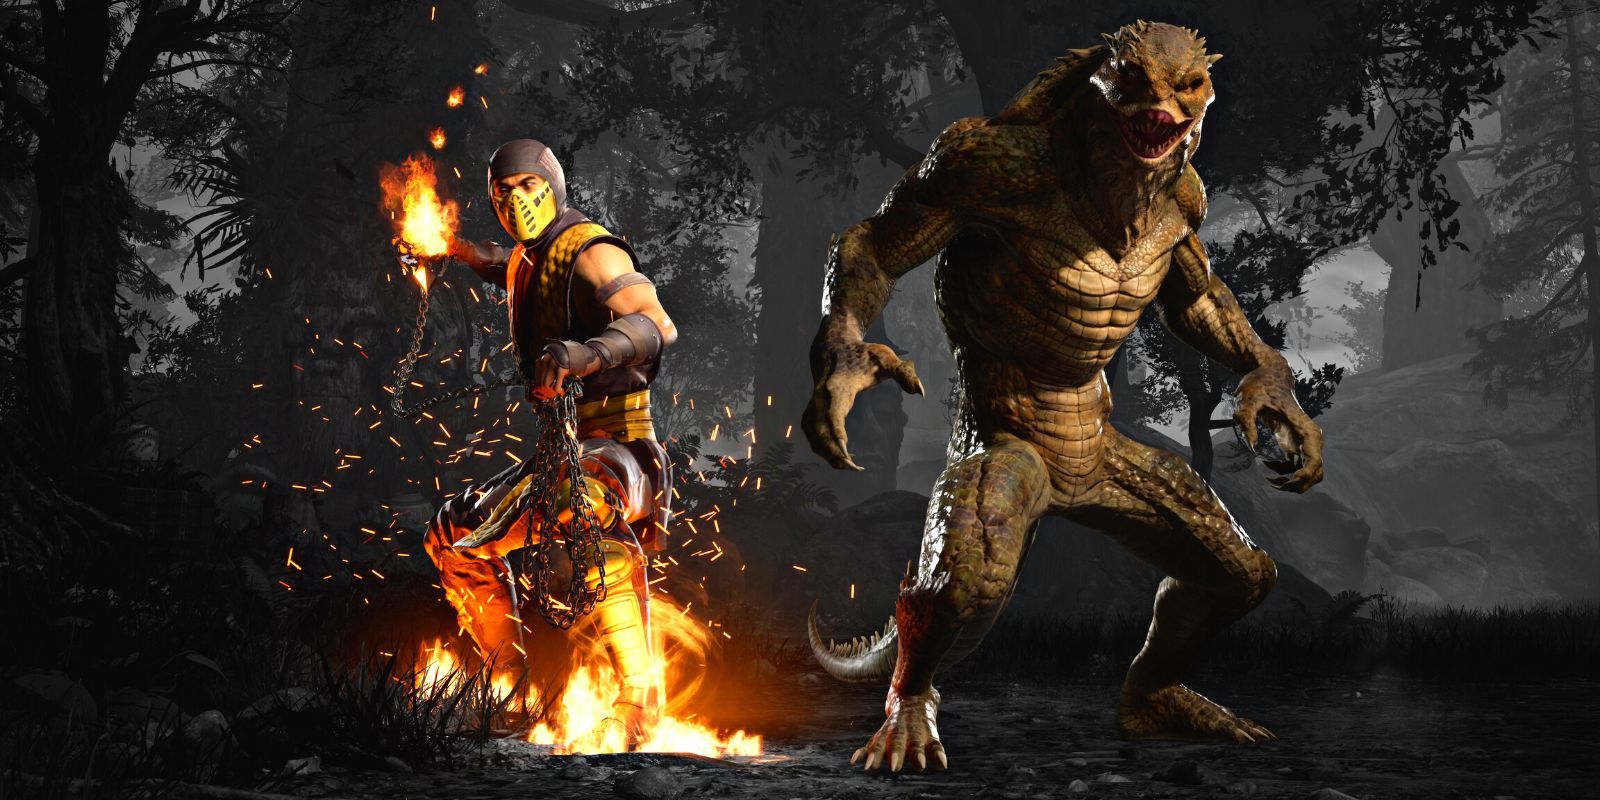 Mortal Kombat 1 Banished trailer confirms Reptile, Ashrah, Havik